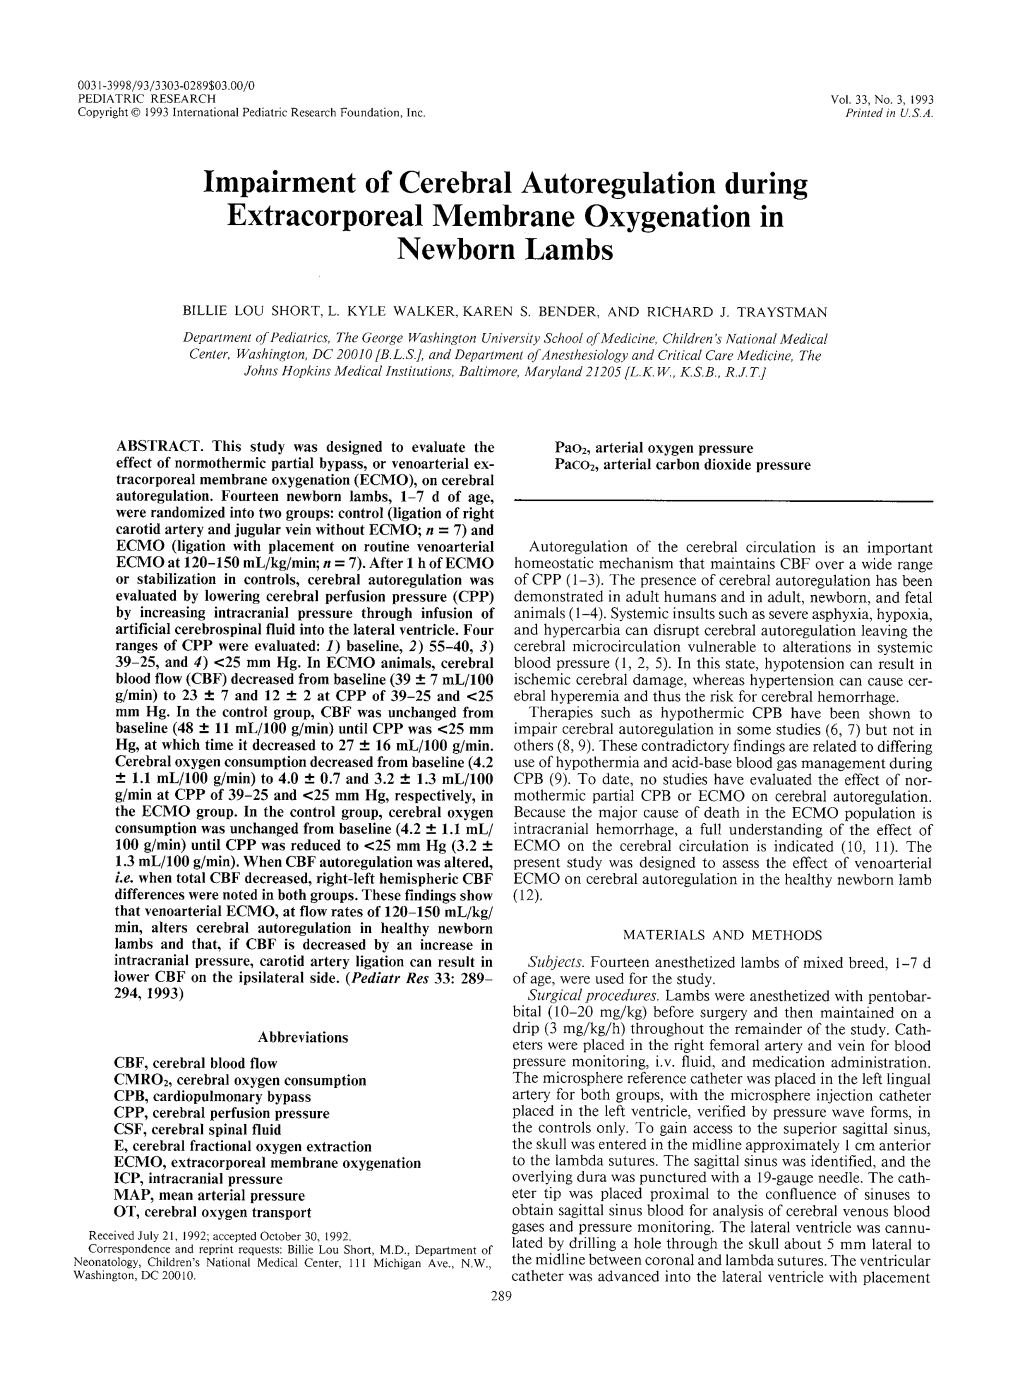 Impairment of Cerebral Autoregulation During Extracorporeal Membrane Oxygenation in Newborn Lambs